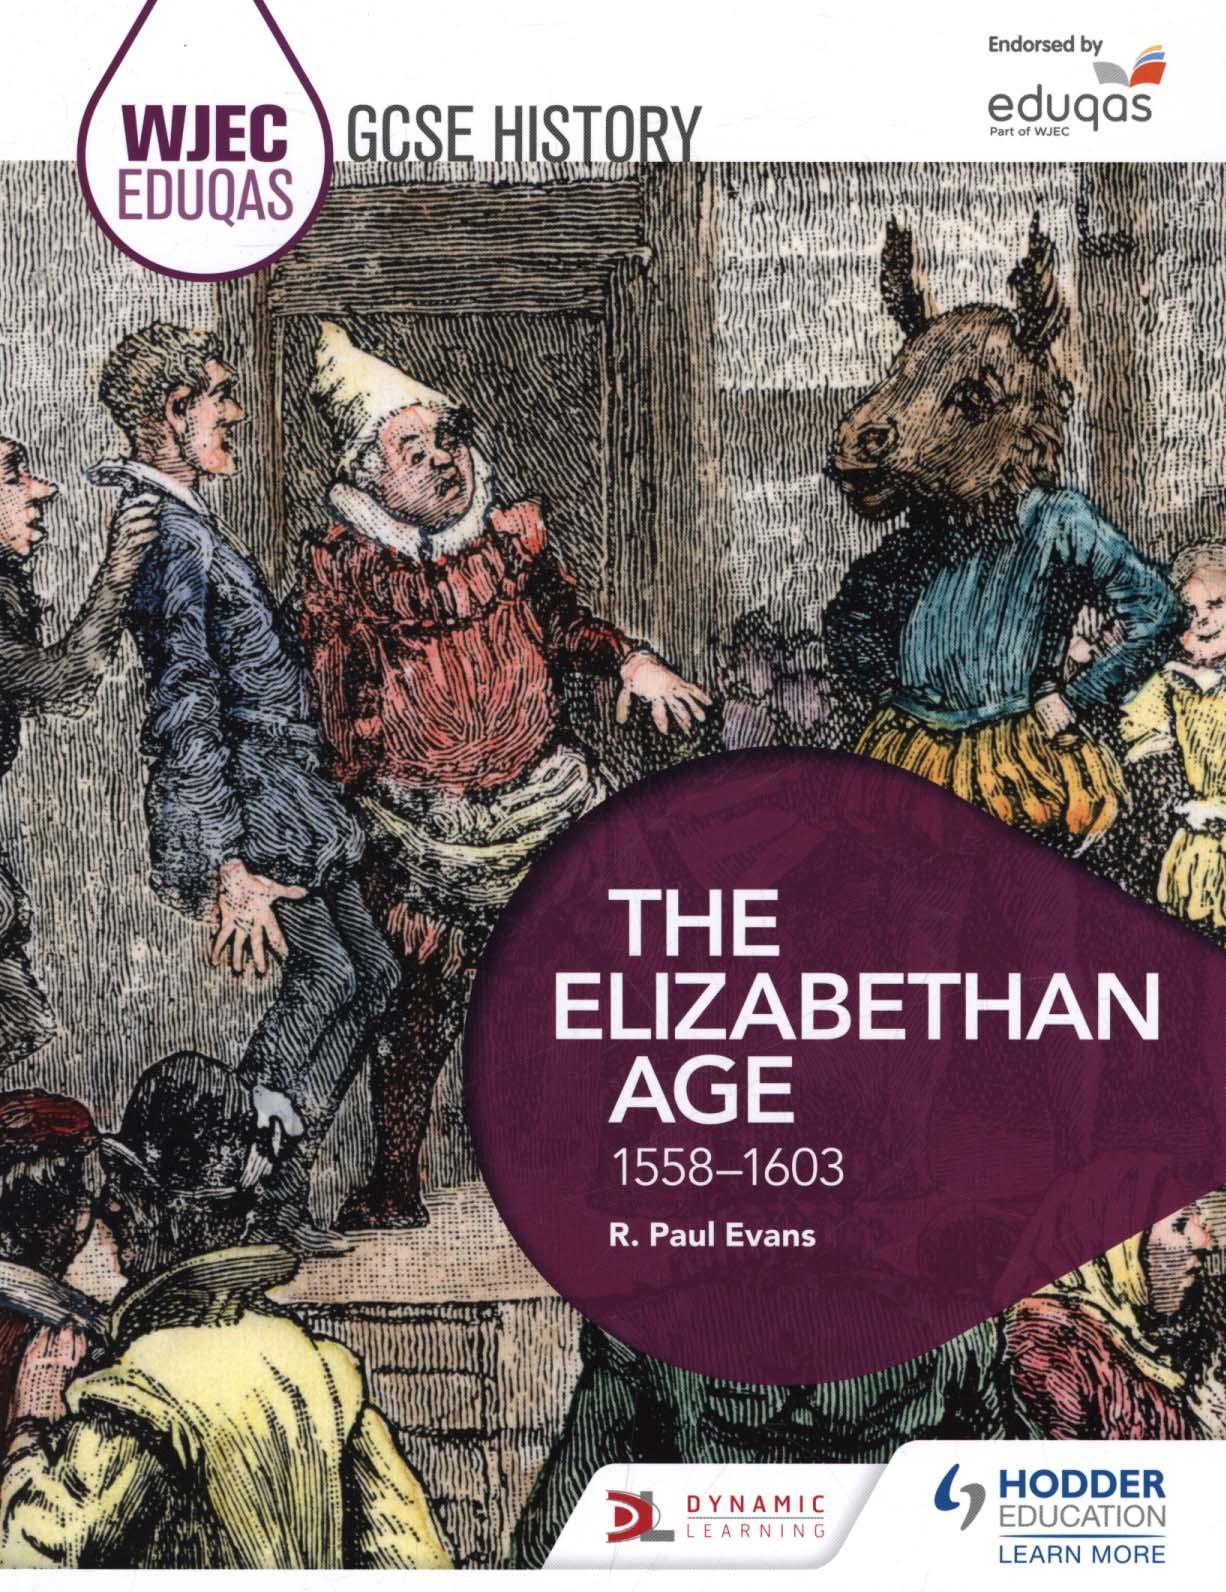 WJEC Eduqas GCSE History: The Elizabethan Age, 1558-1603